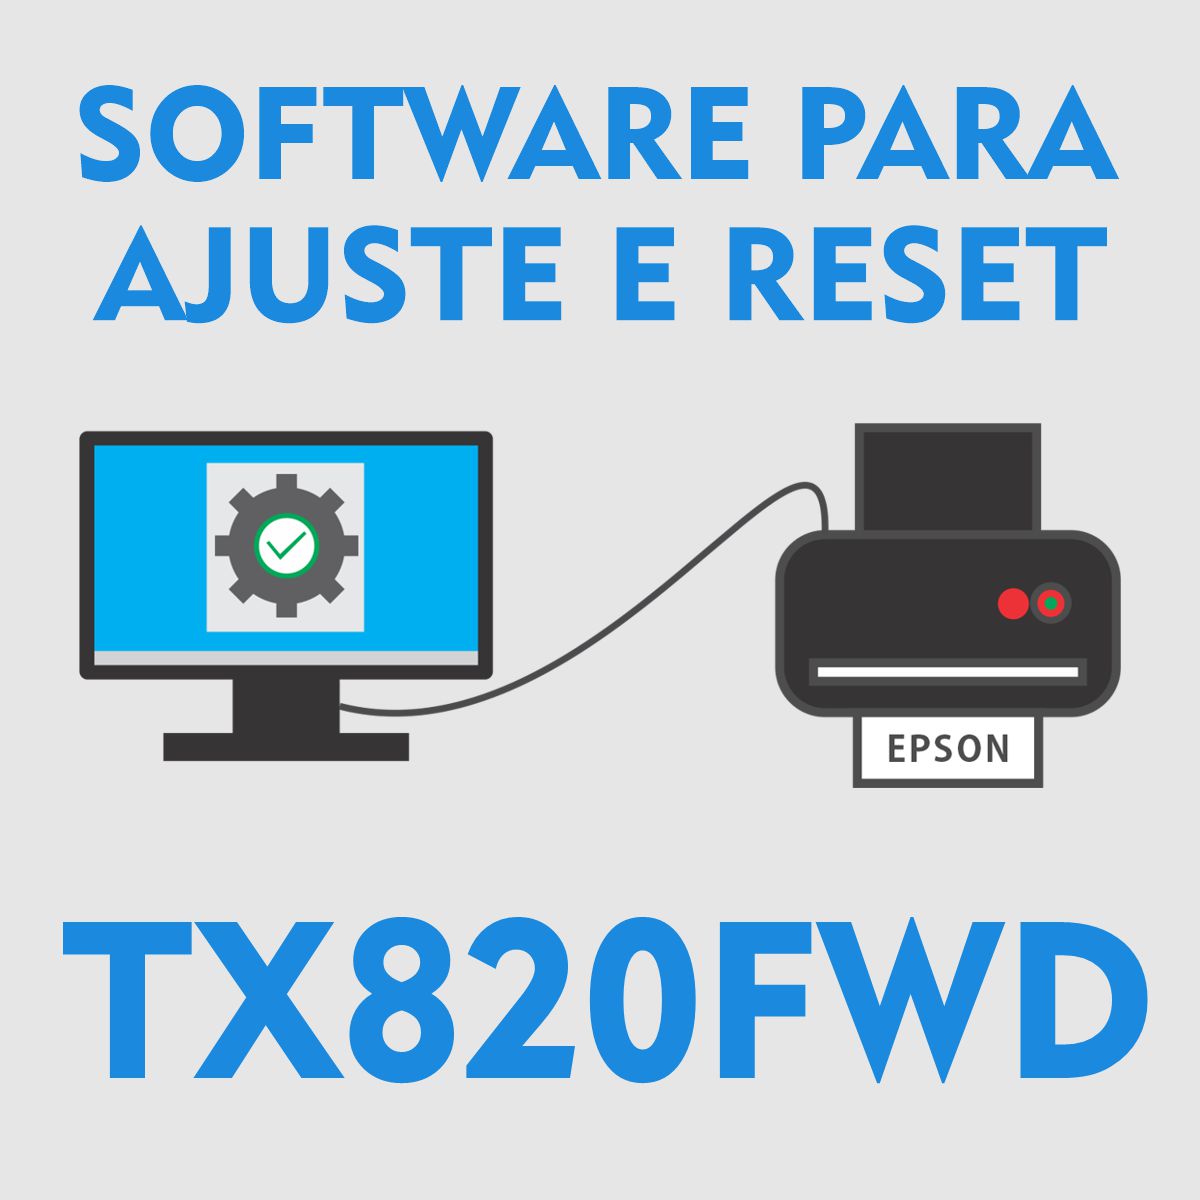 Epson TX820FWD | Software para Ajustes e Reset das Almofadas